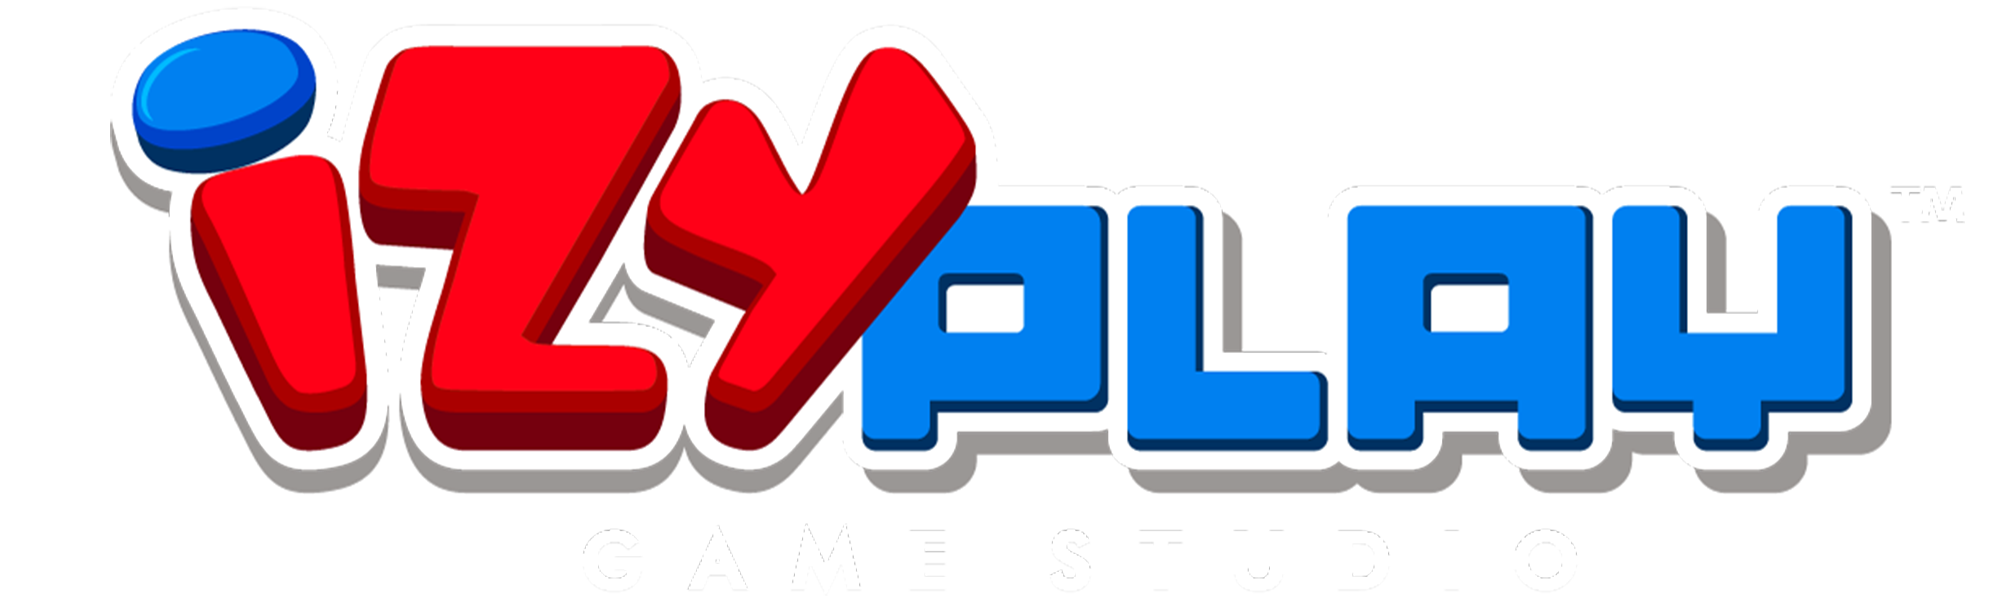 Contact Us | IzyPlay Game Studio